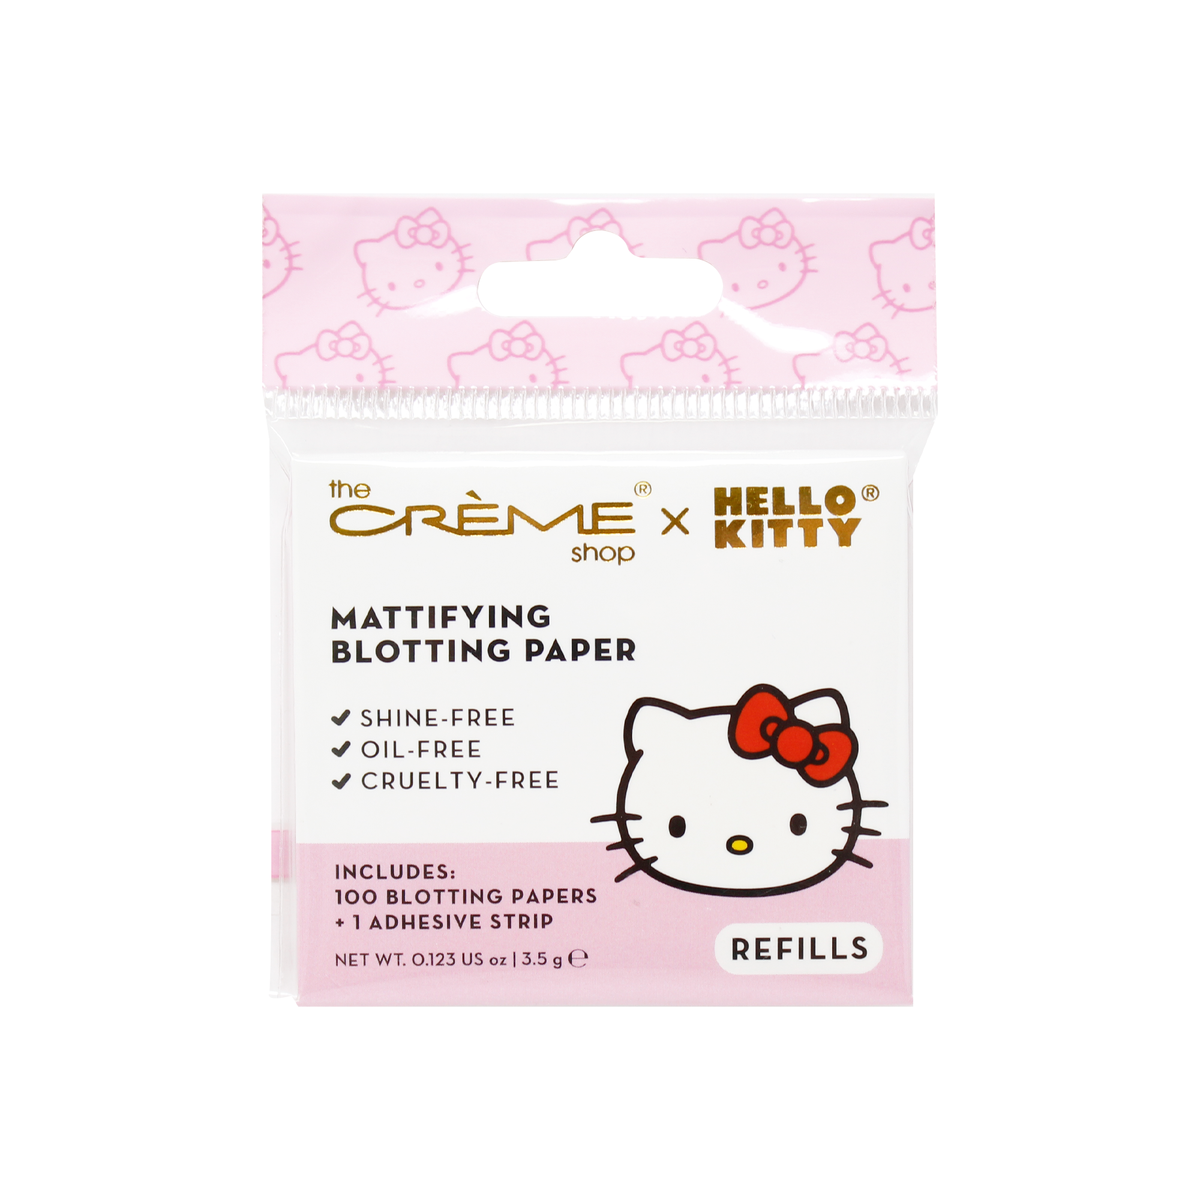 Hello Kitty x The Crème Shop Mattifying Blotting Paper Refills Beauty The Crème Shop   